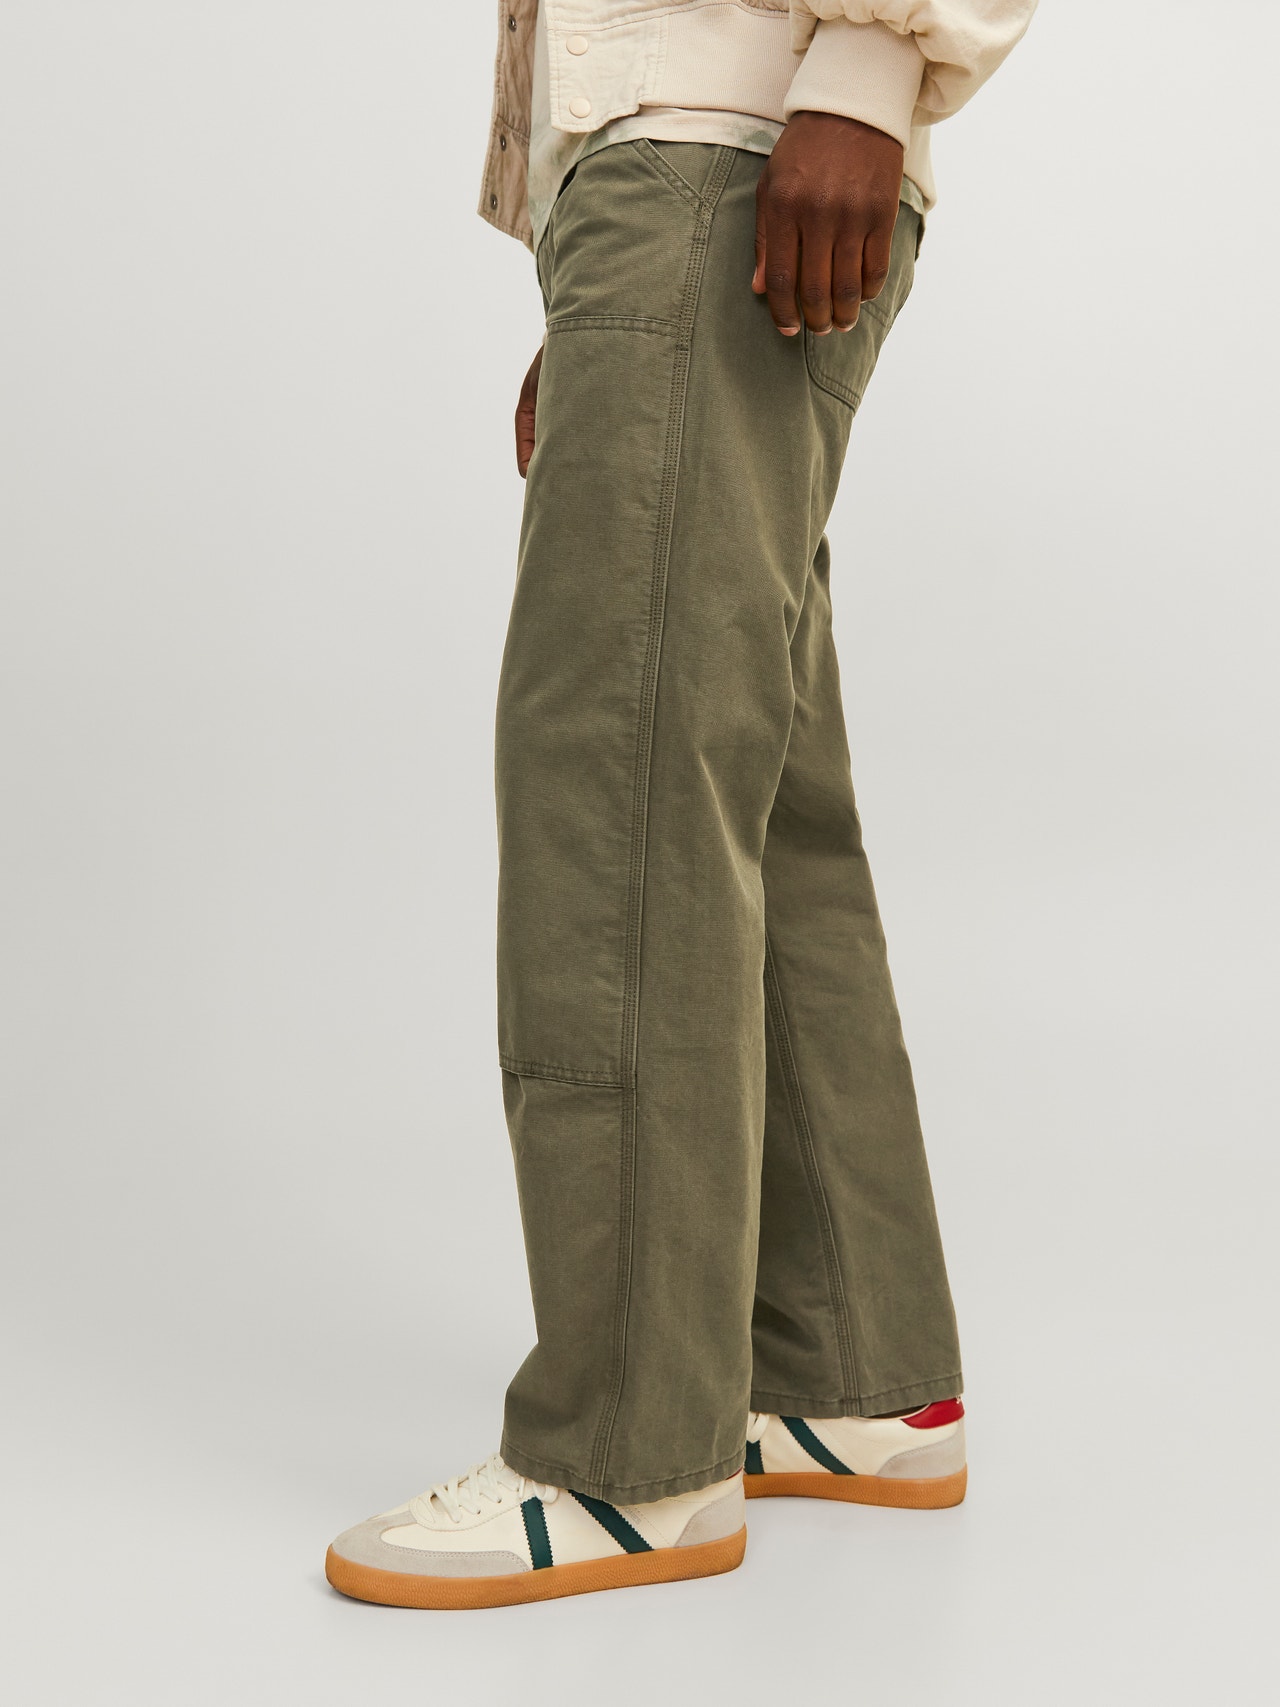 Jack & Jones Loose Fit 5 Pocket trousers -Olive Night - 12258362